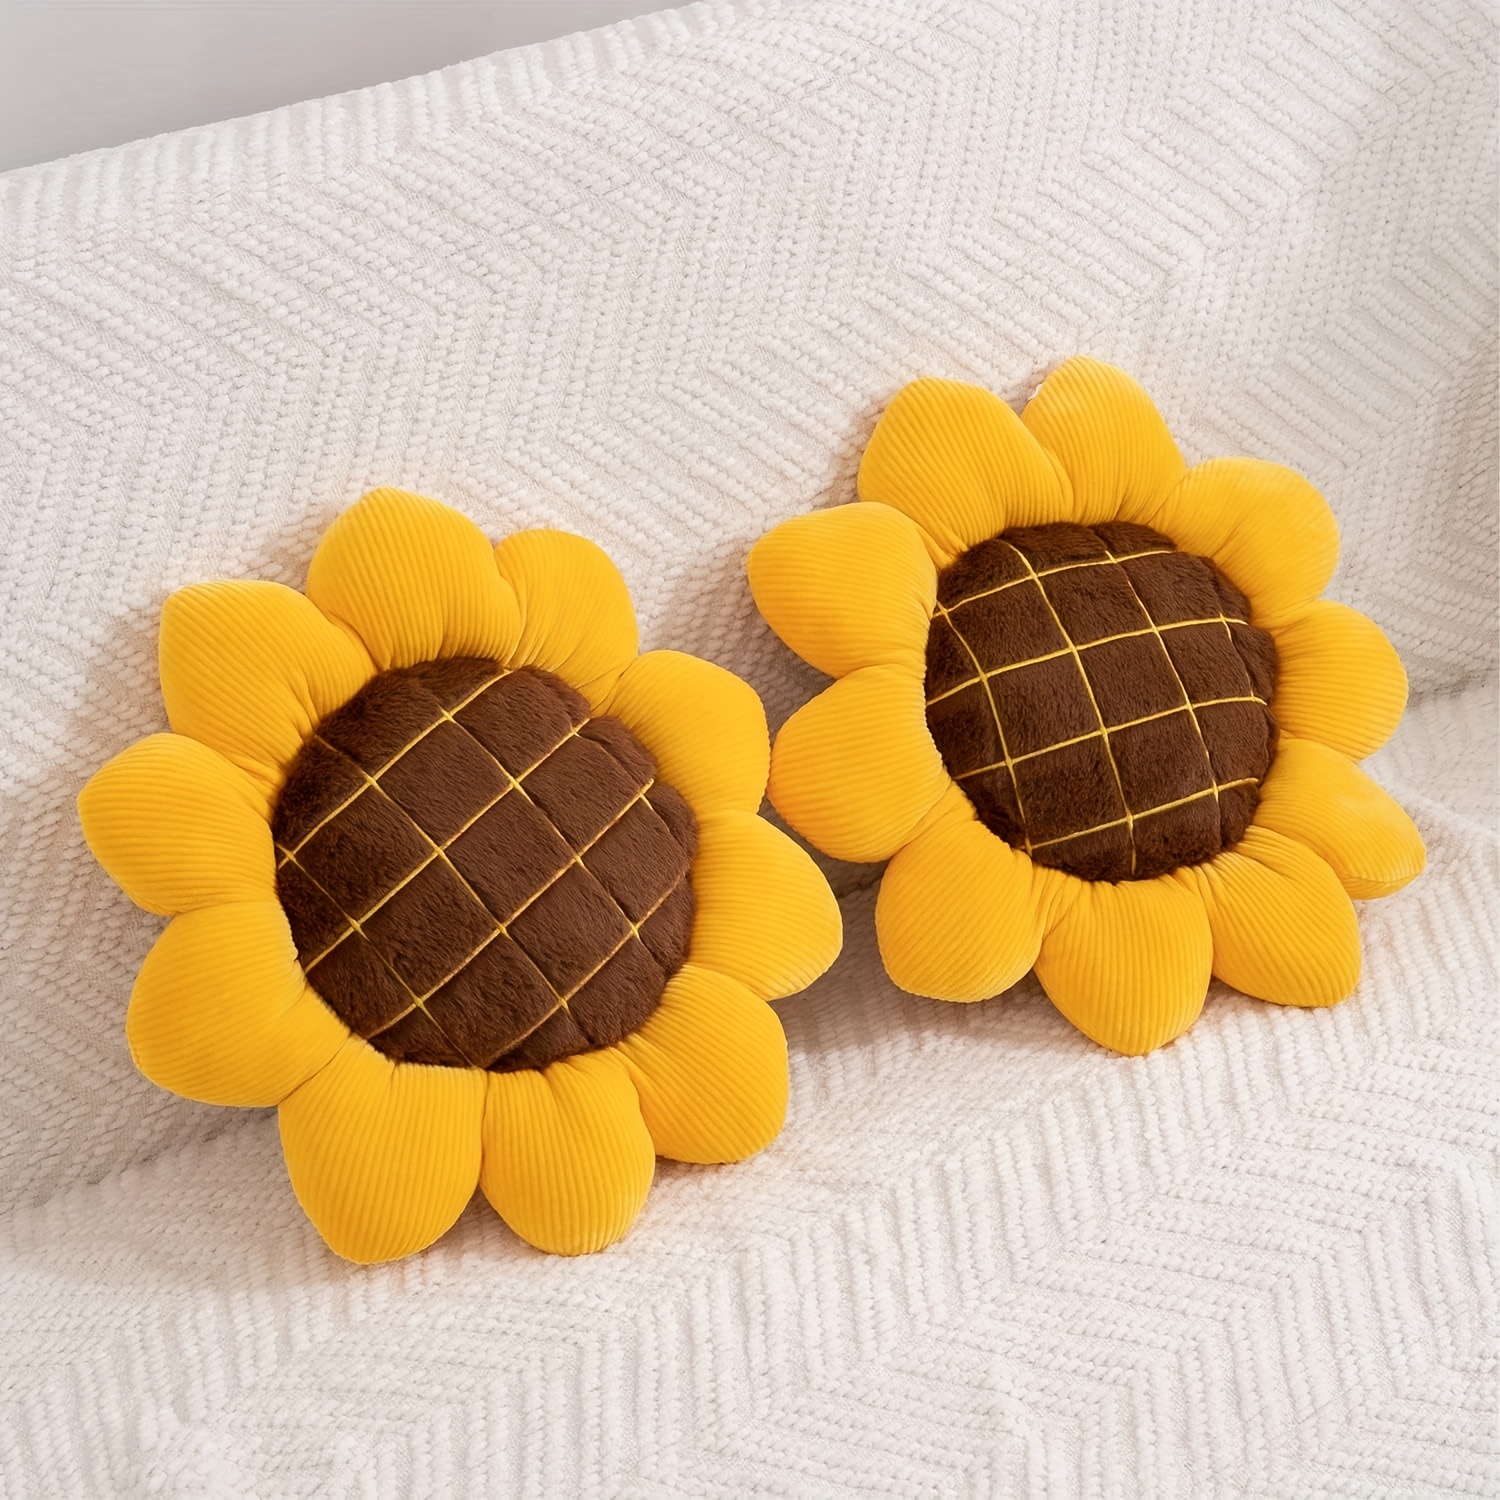 Coume 2 cojines de suelo con diseño de girasol 3D, cojín de asiento de  girasol, cojín amarillo con forma de girasol, almohadillas decorativas de  felpa